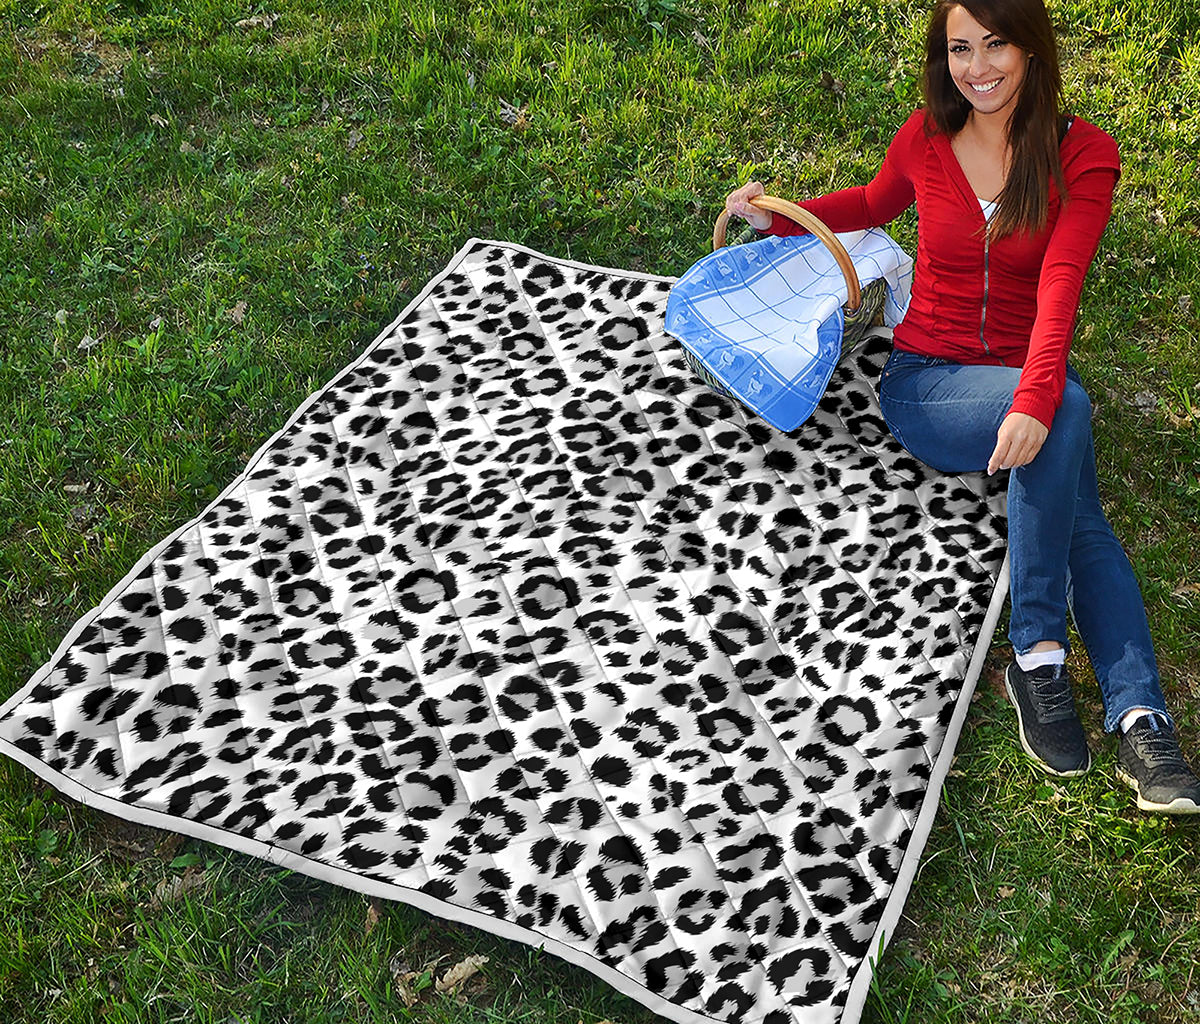 White Leopard Print Quilt